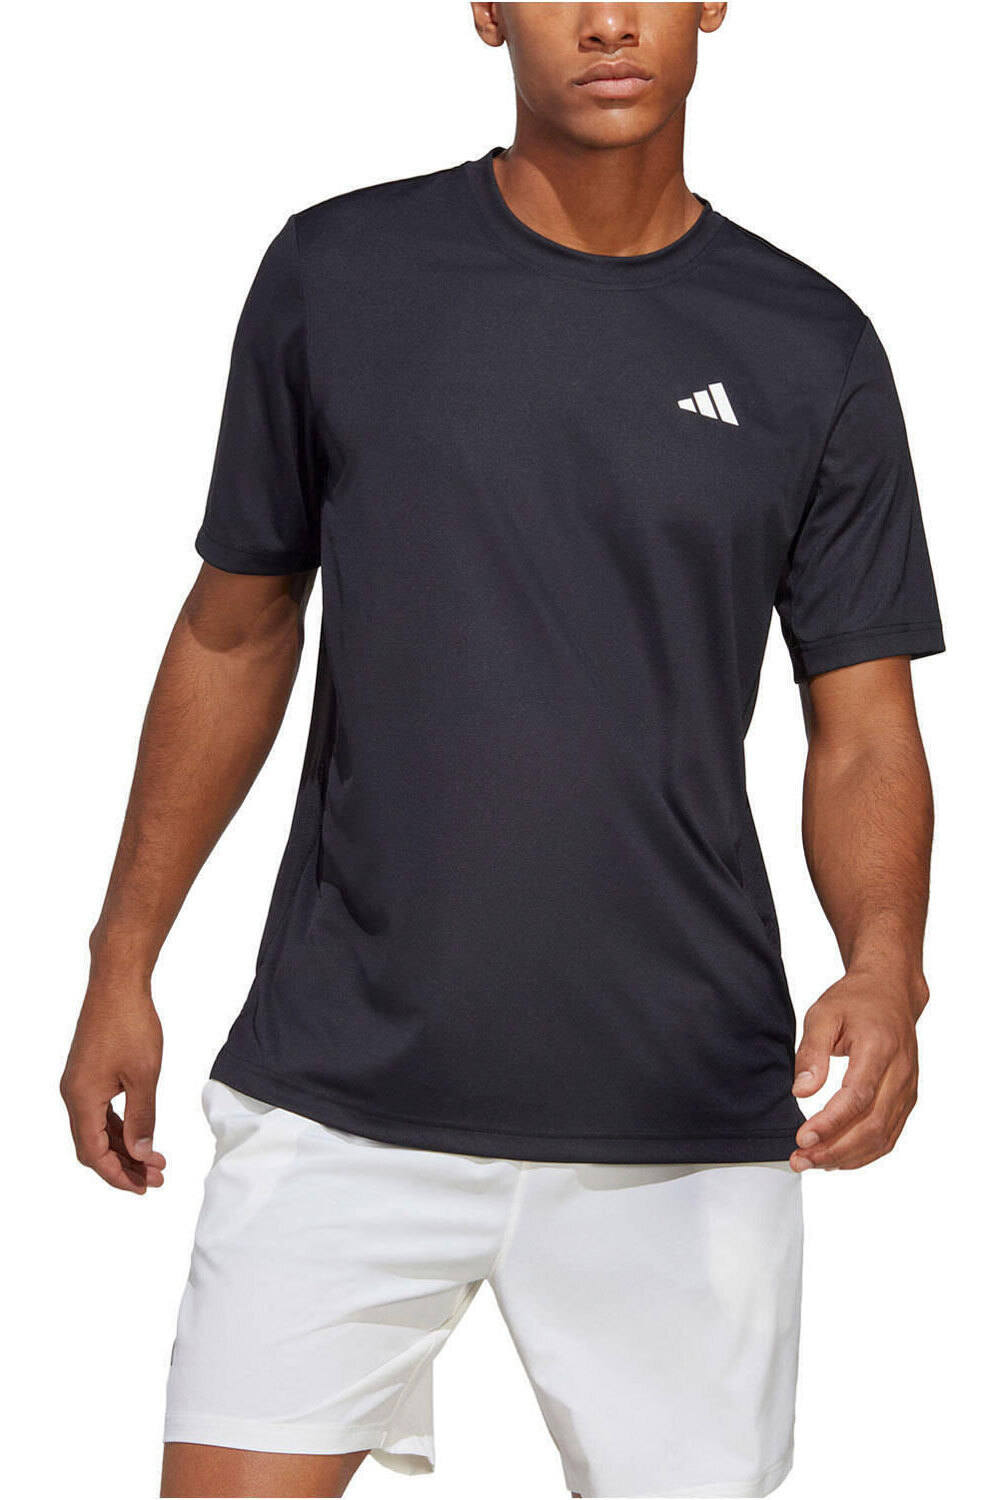 adidas camiseta tenis manga corta hombre Club Tennis vista frontal